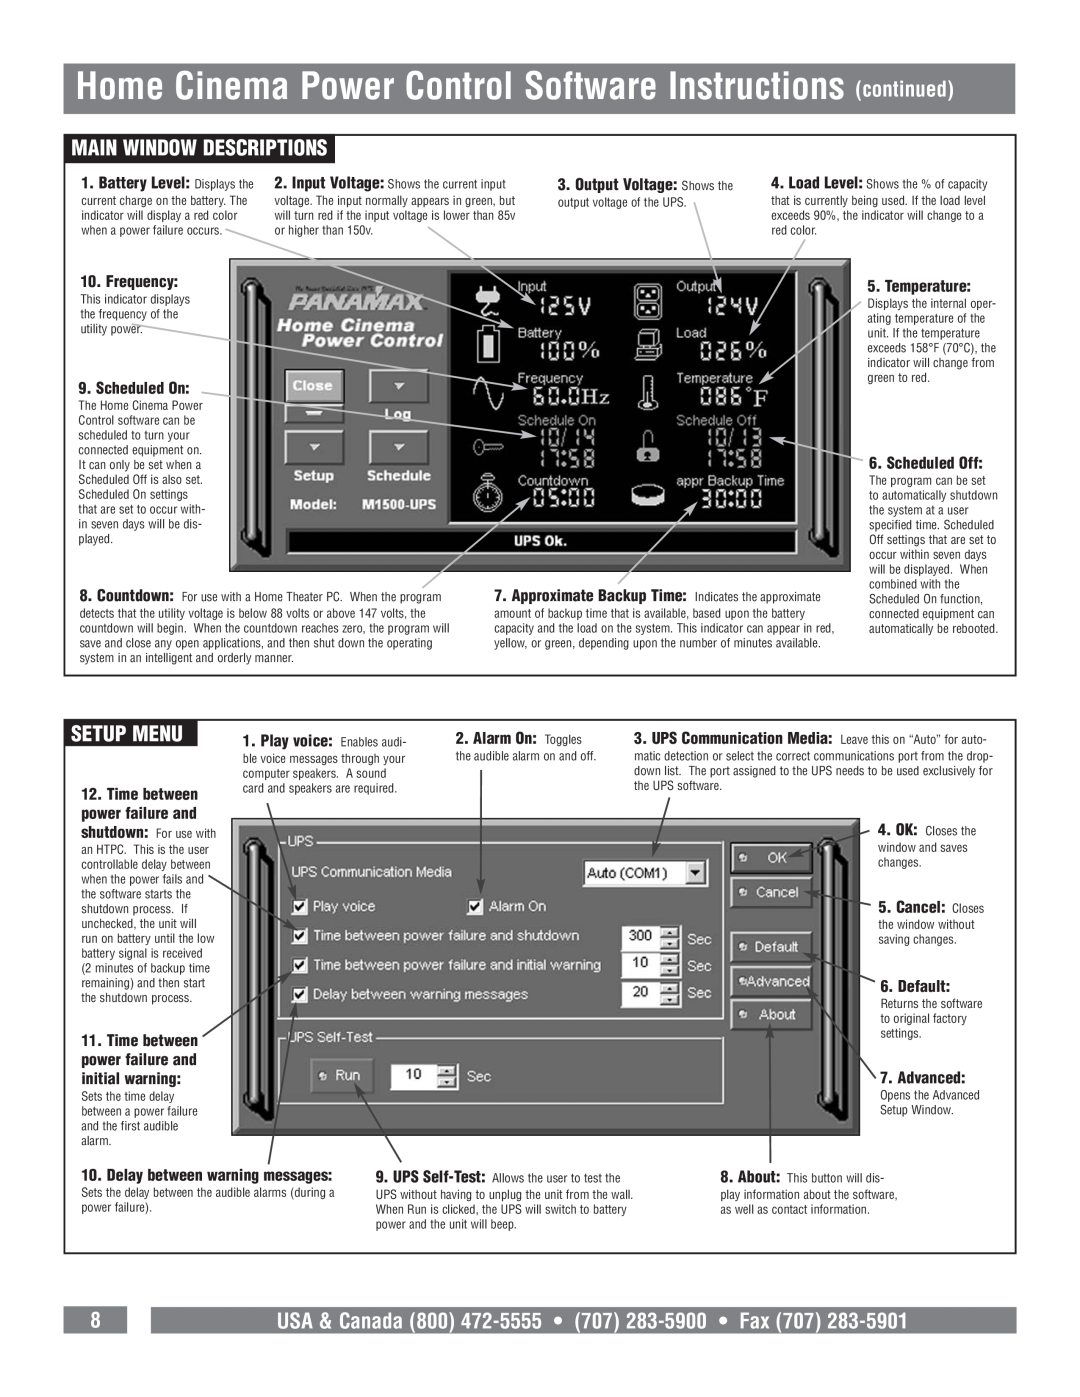 Panamax M1500-UPS Home Cinema Power Control Software Instructions continued, Main Window Descriptions, Setup Menu, Default 